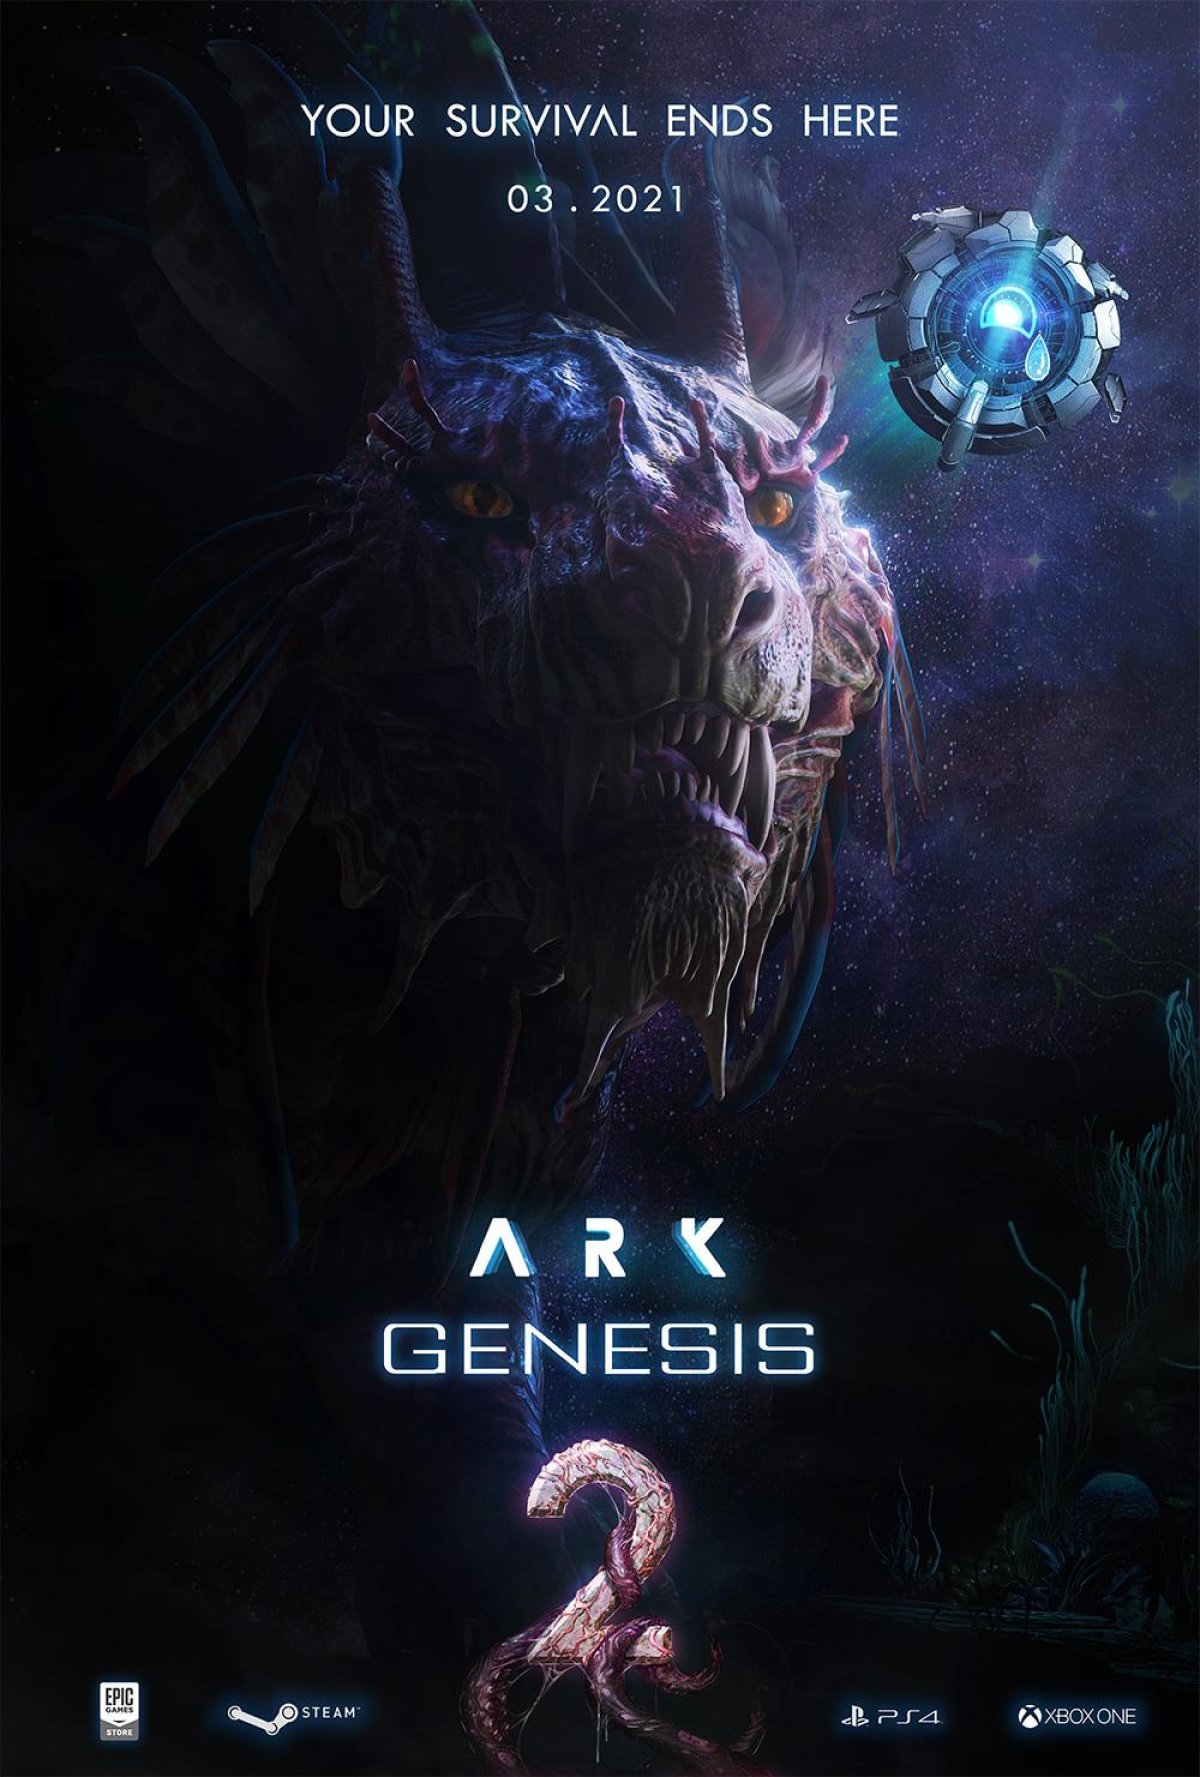 ARK's Genesis Part 2 expansion arrives next March, bringing new